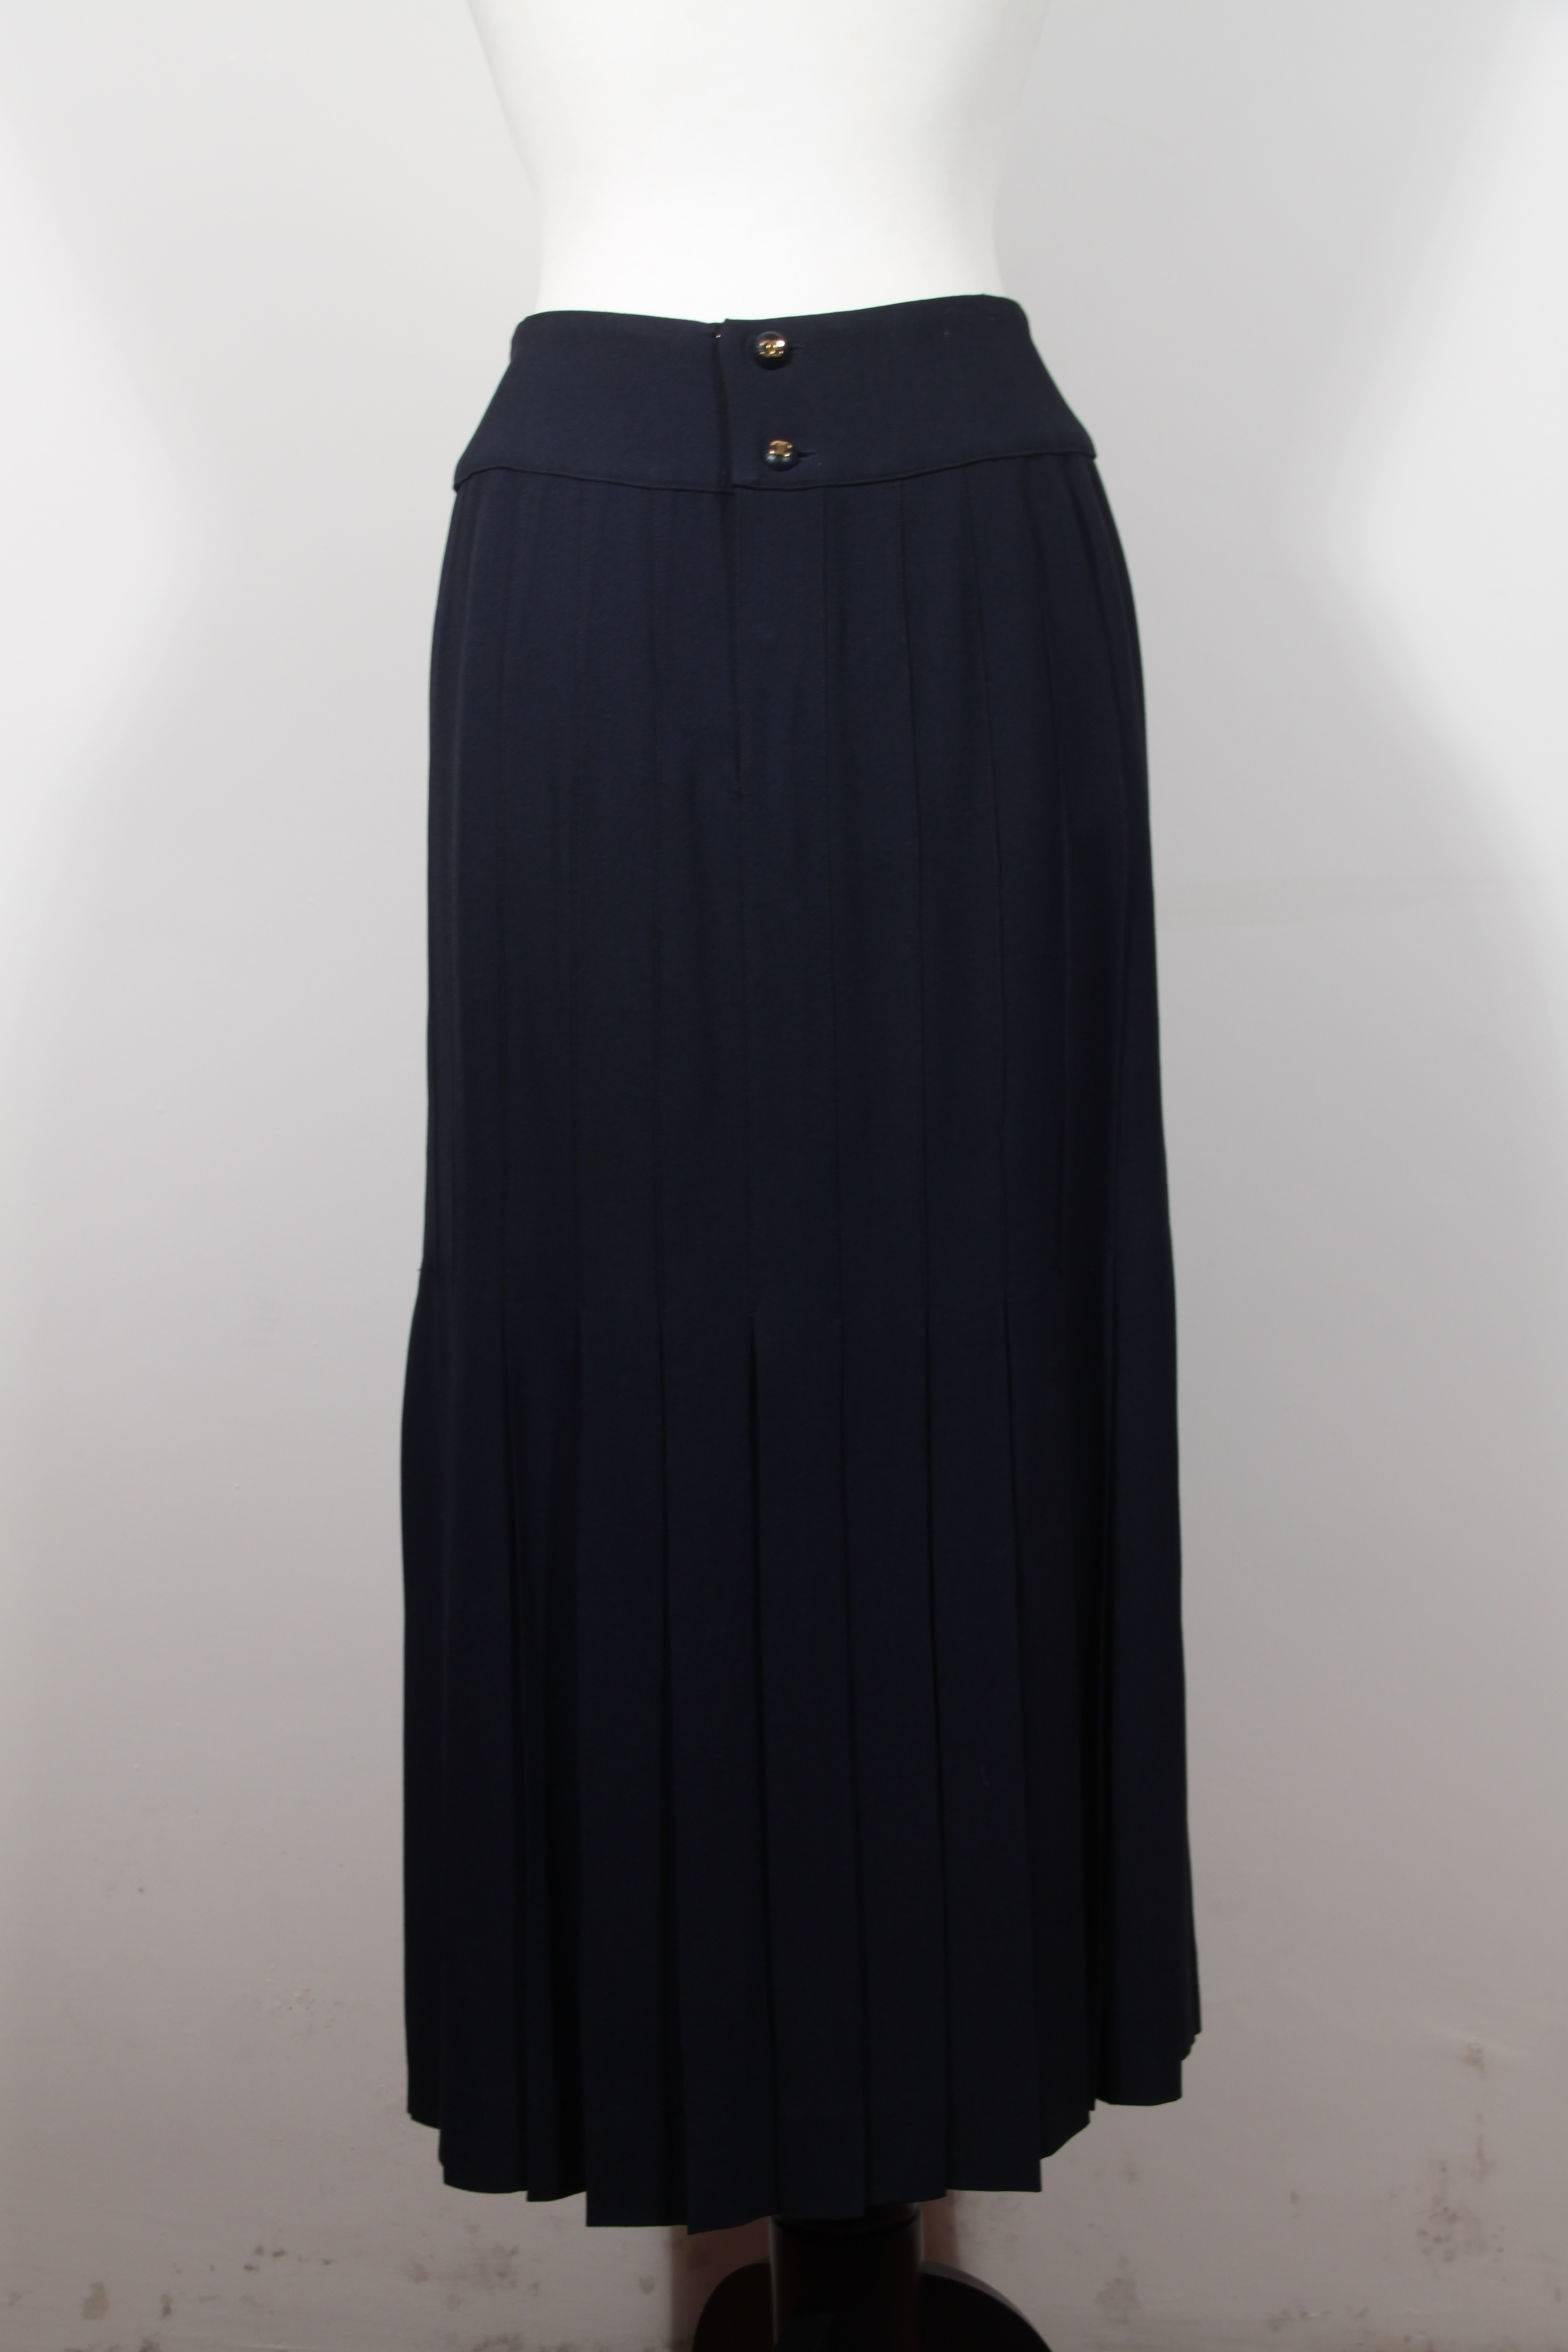 Black CHANEL BOUTIQUE Vintage Navy Blue Long MAXI SKIRT w/ PLEATS Size 38 FR